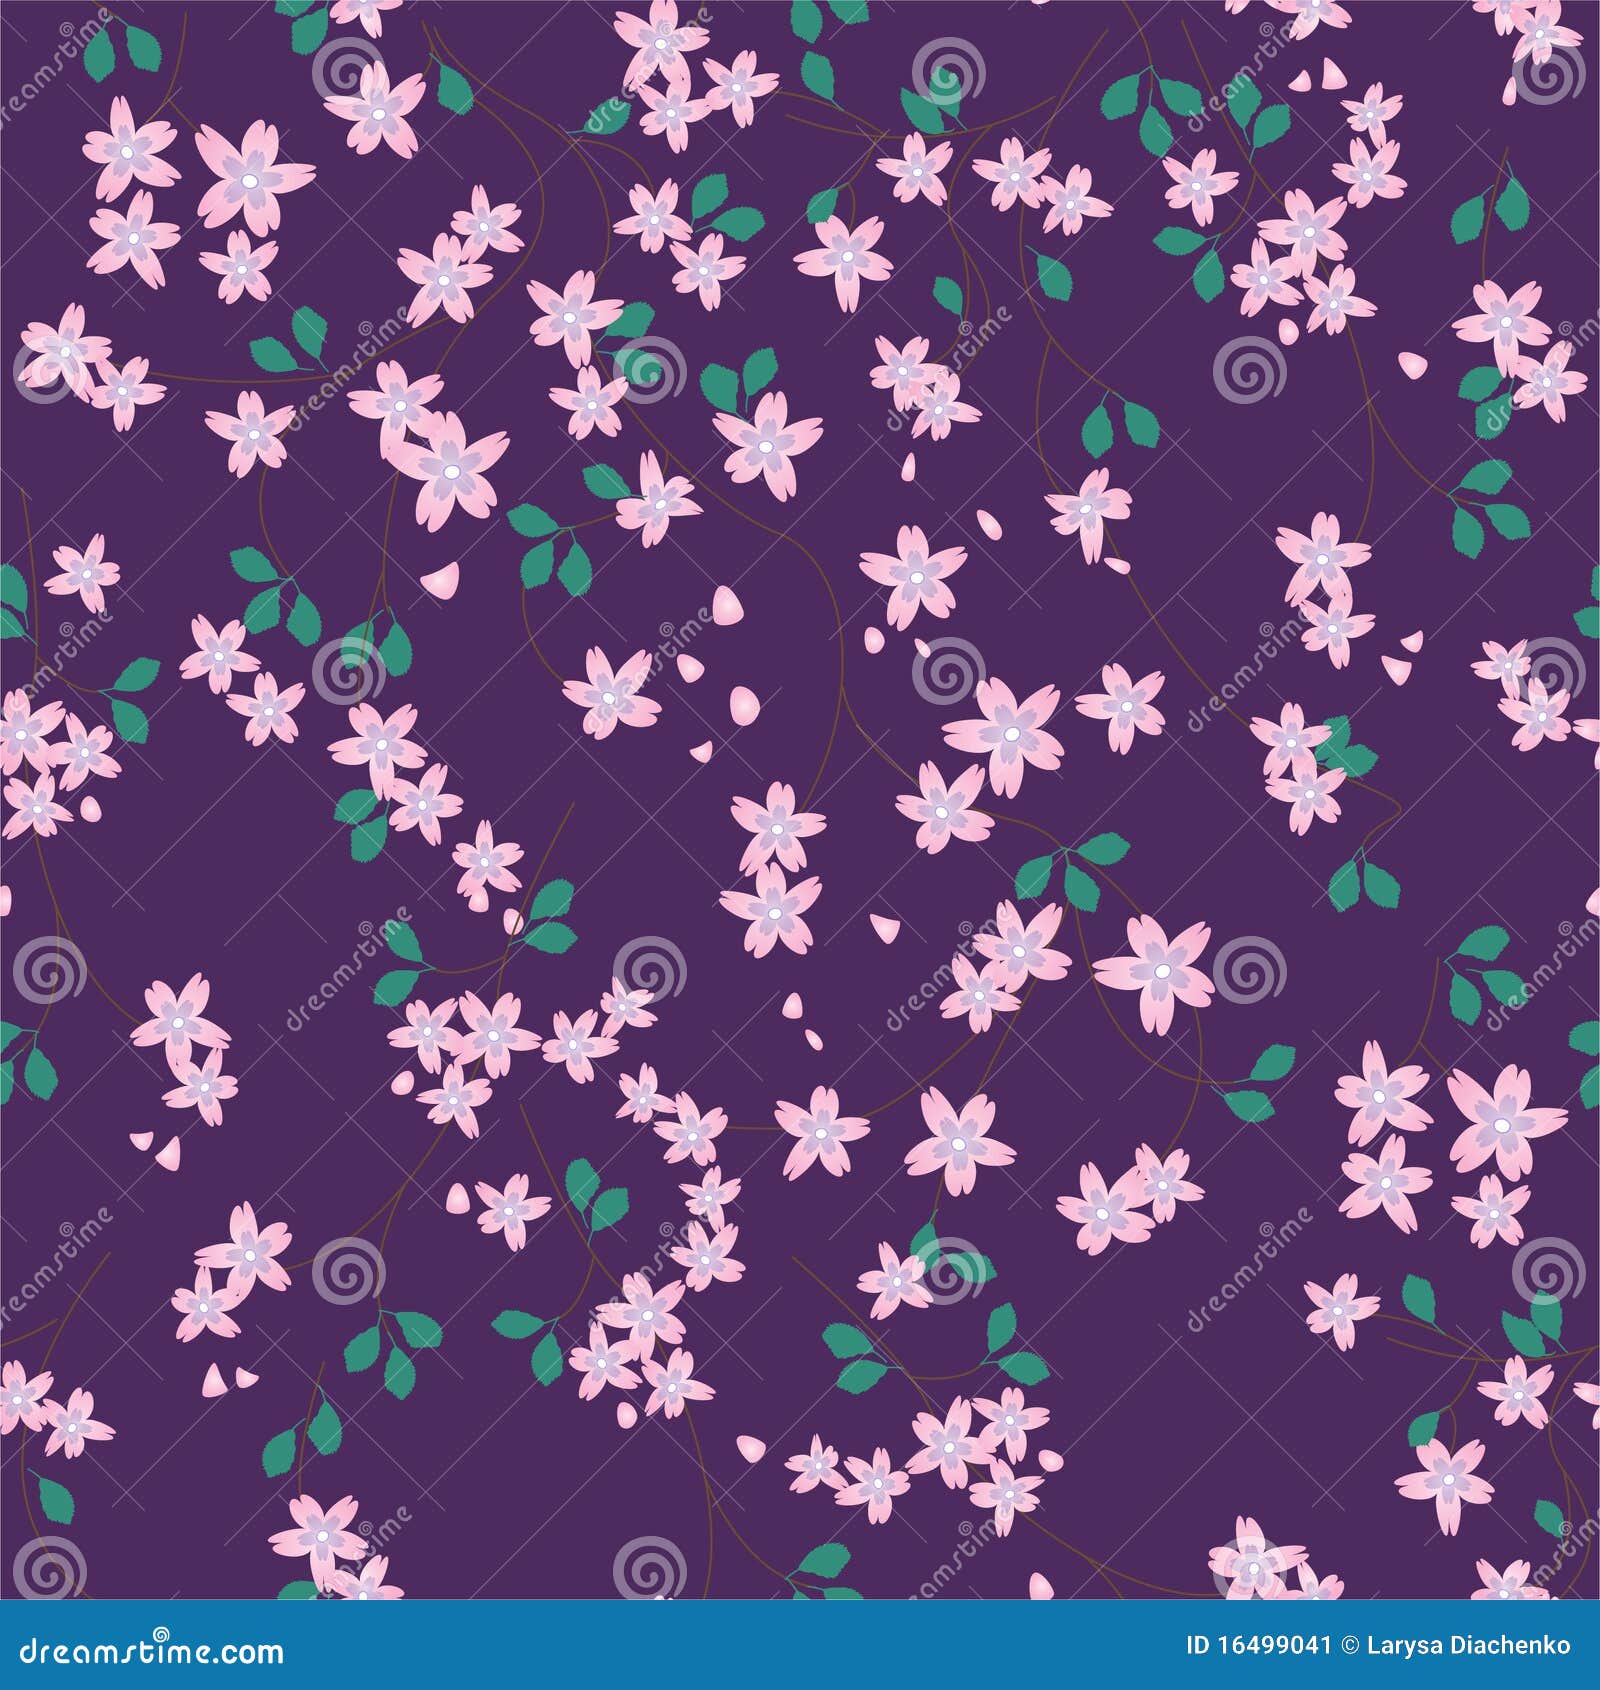 Violet floral pattern stock vector. Illustration of illustrationrn